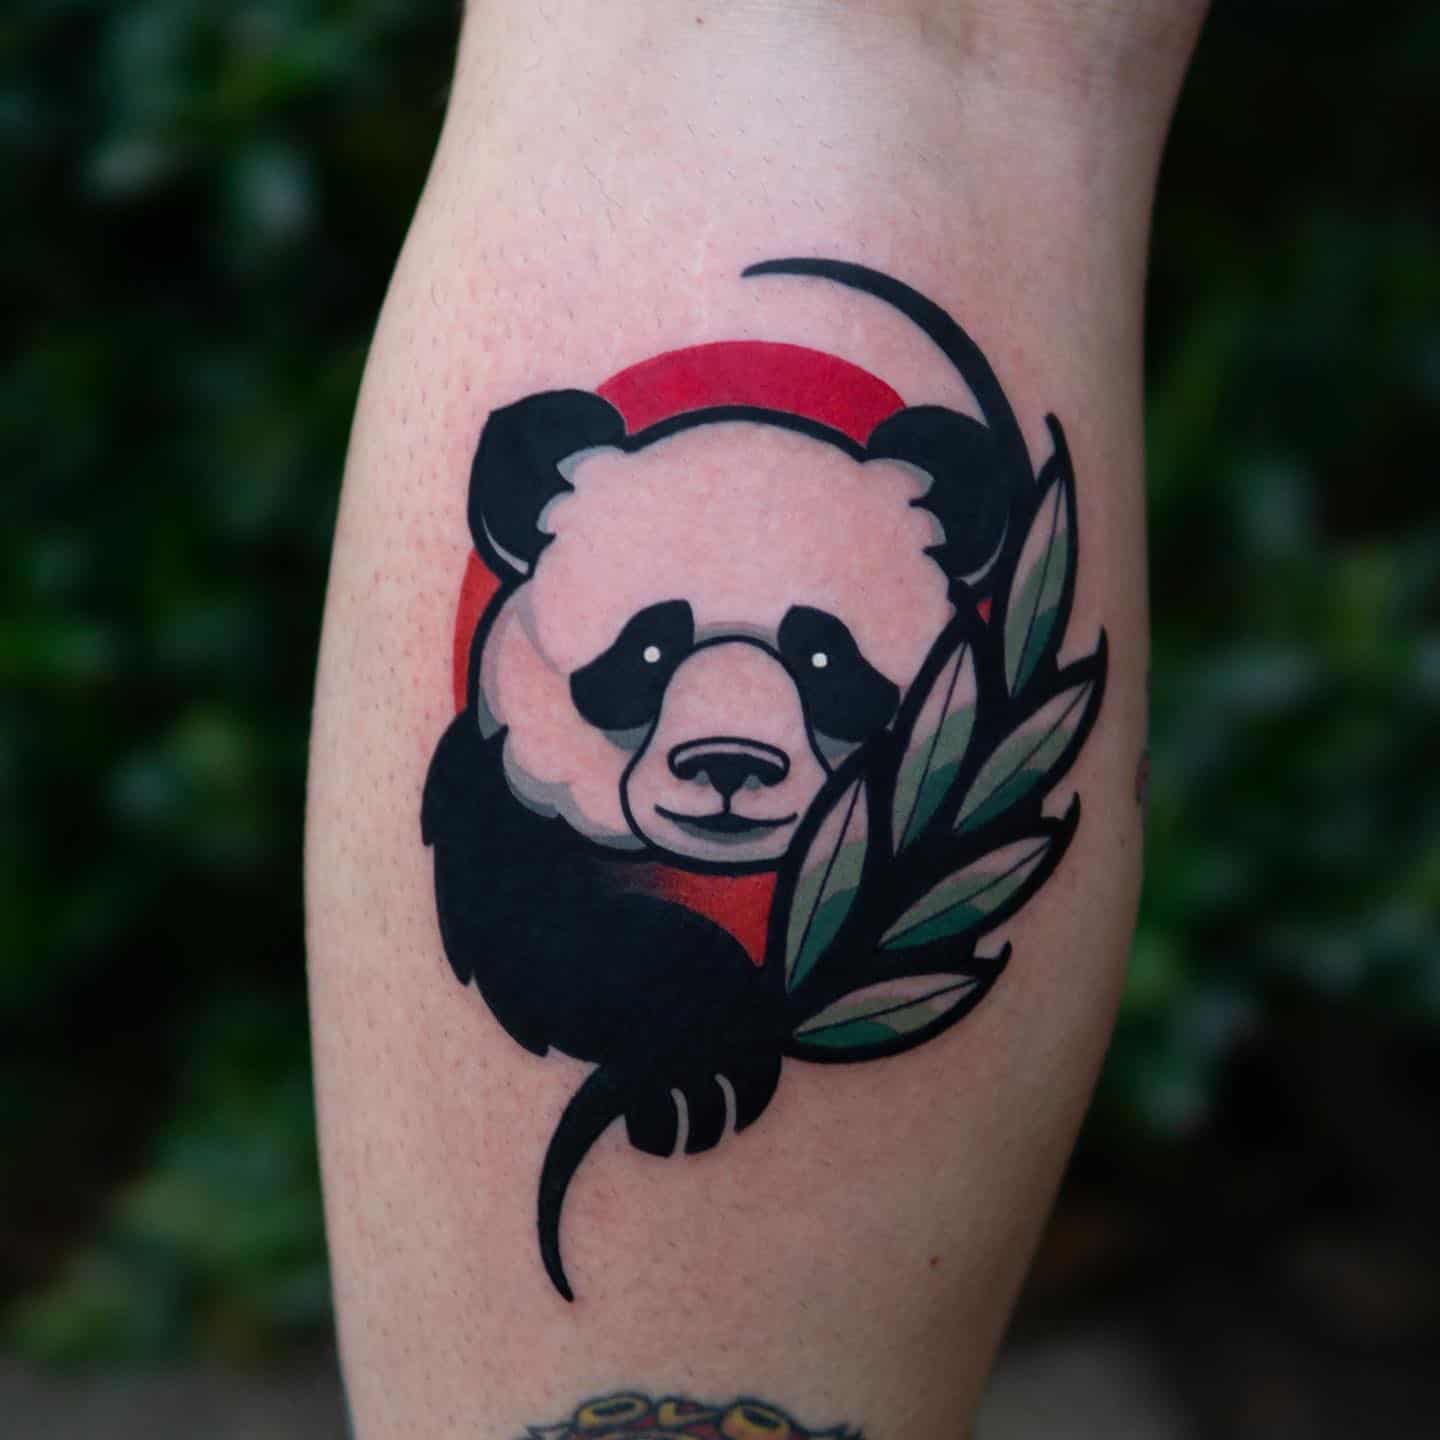 Panda tattoo by yubtattoo